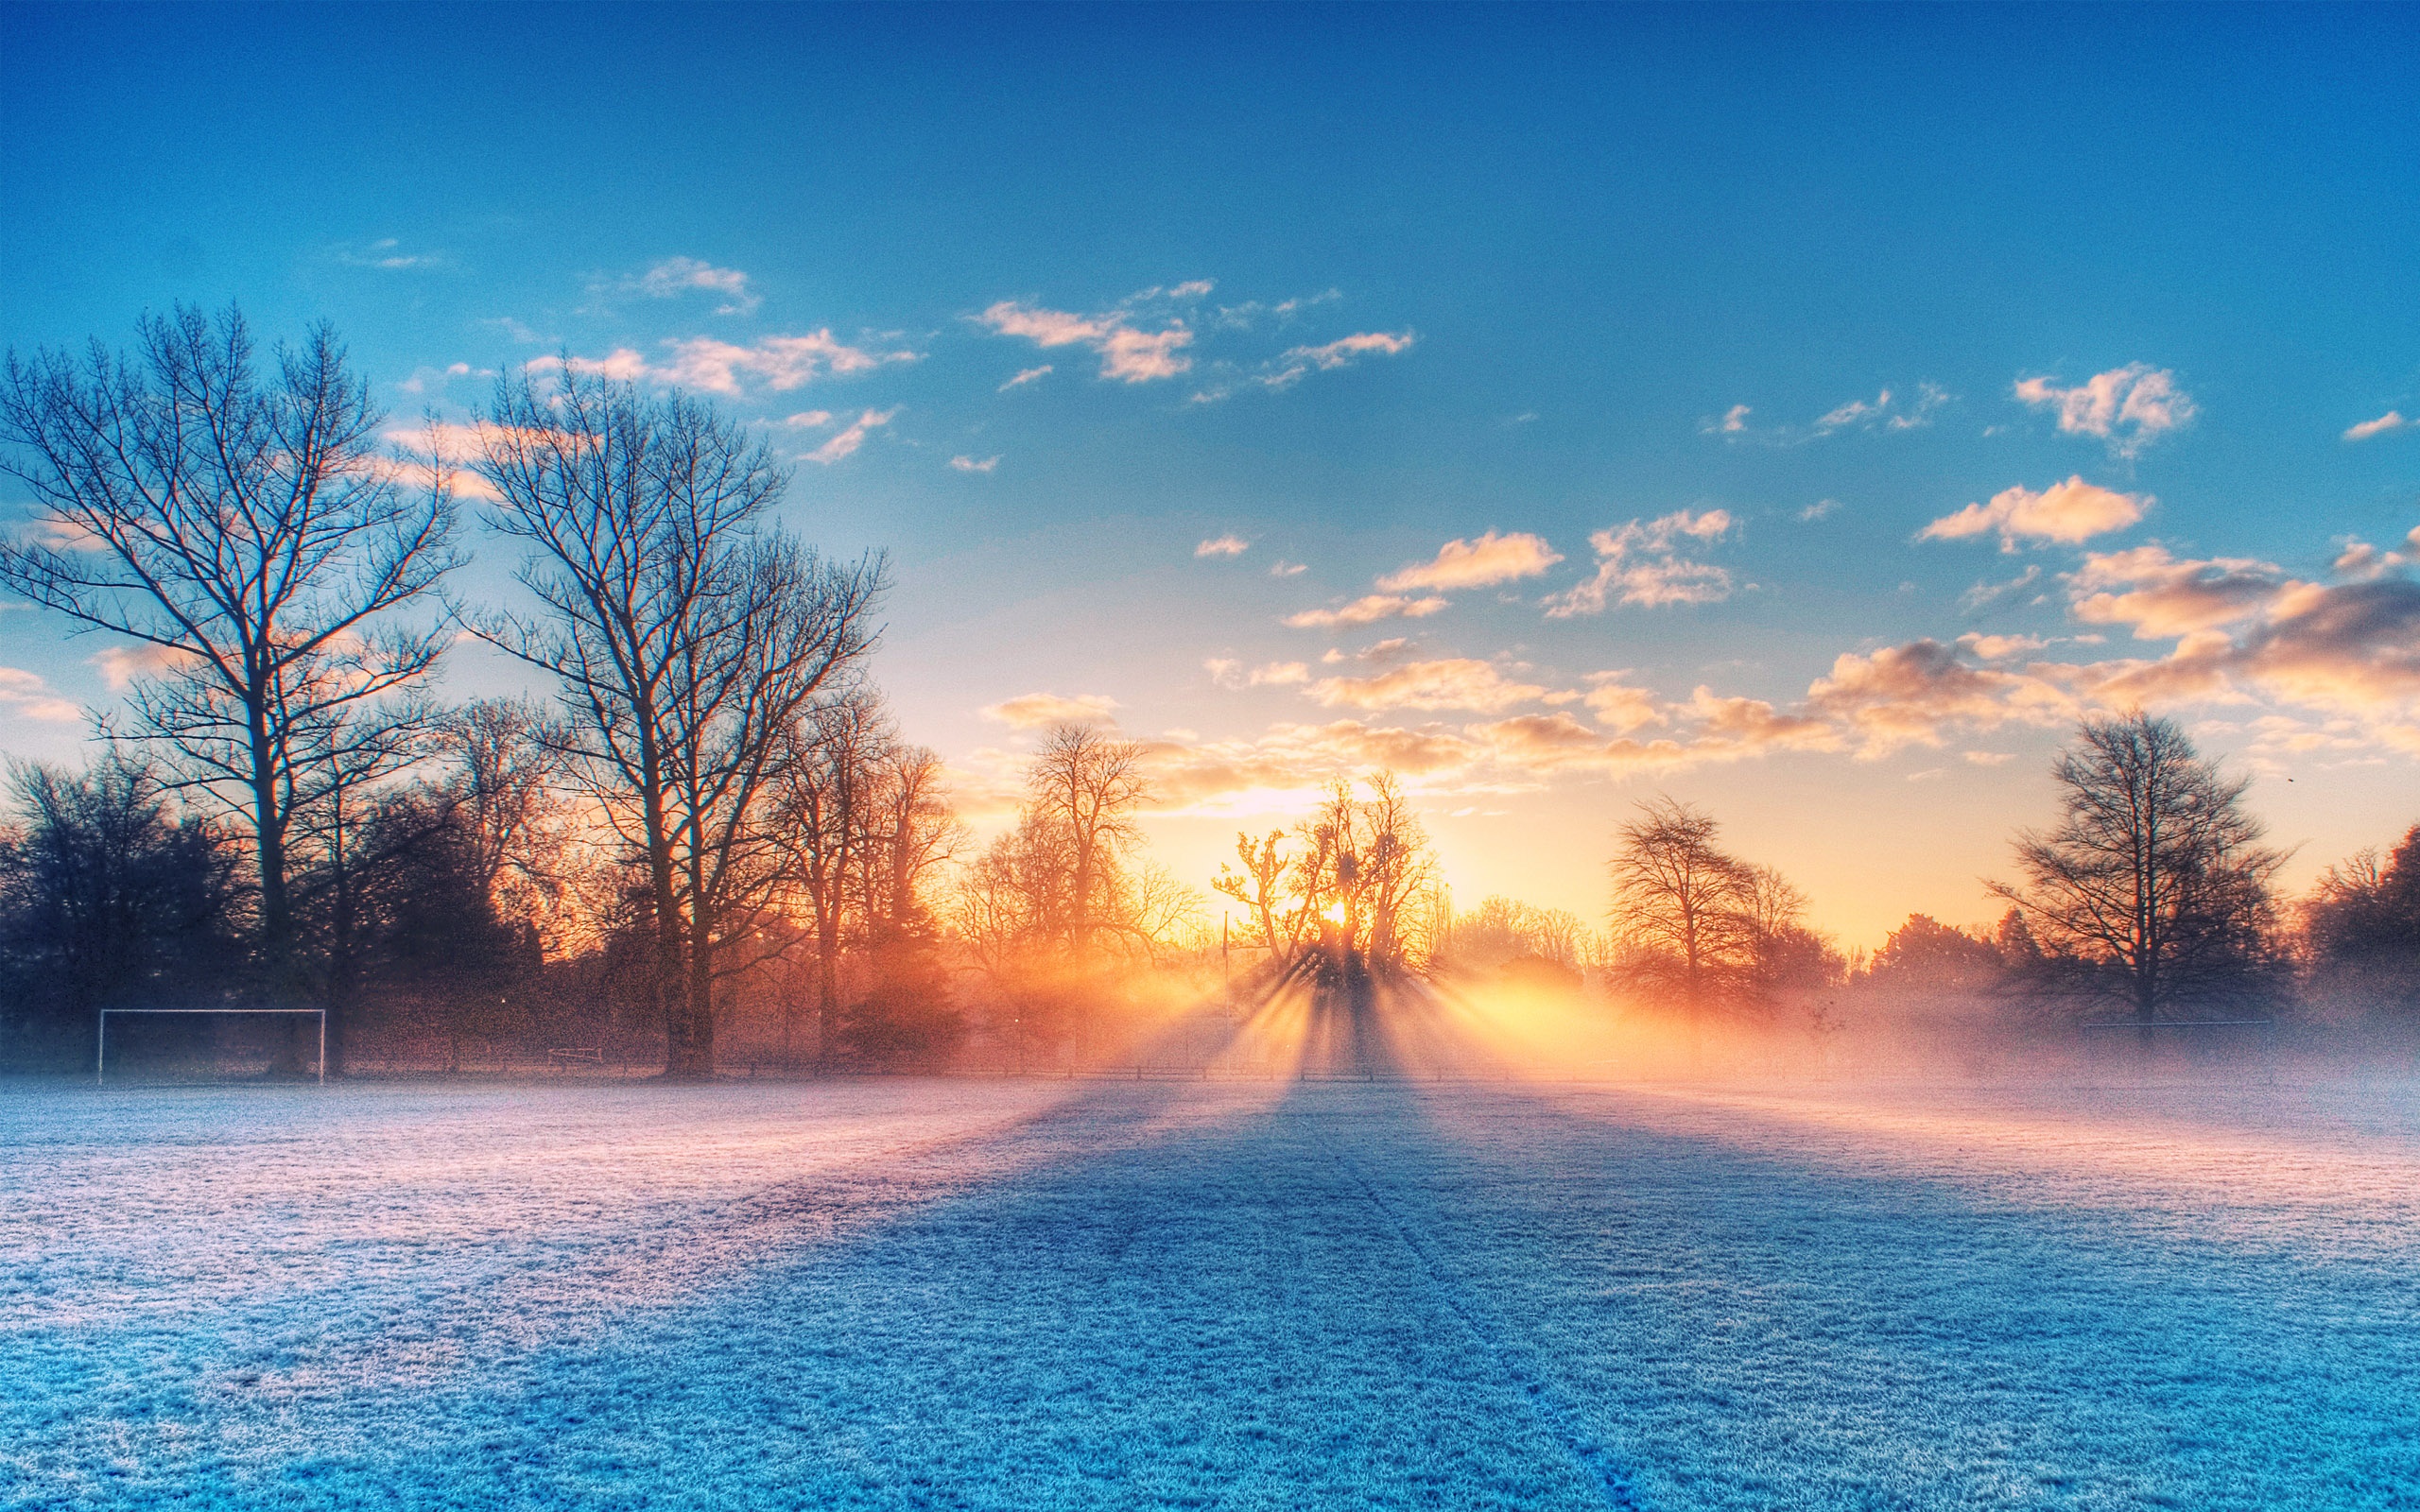 A Frosty Winter Scenery - HD Wallpapers Widescreen - 2560x1600